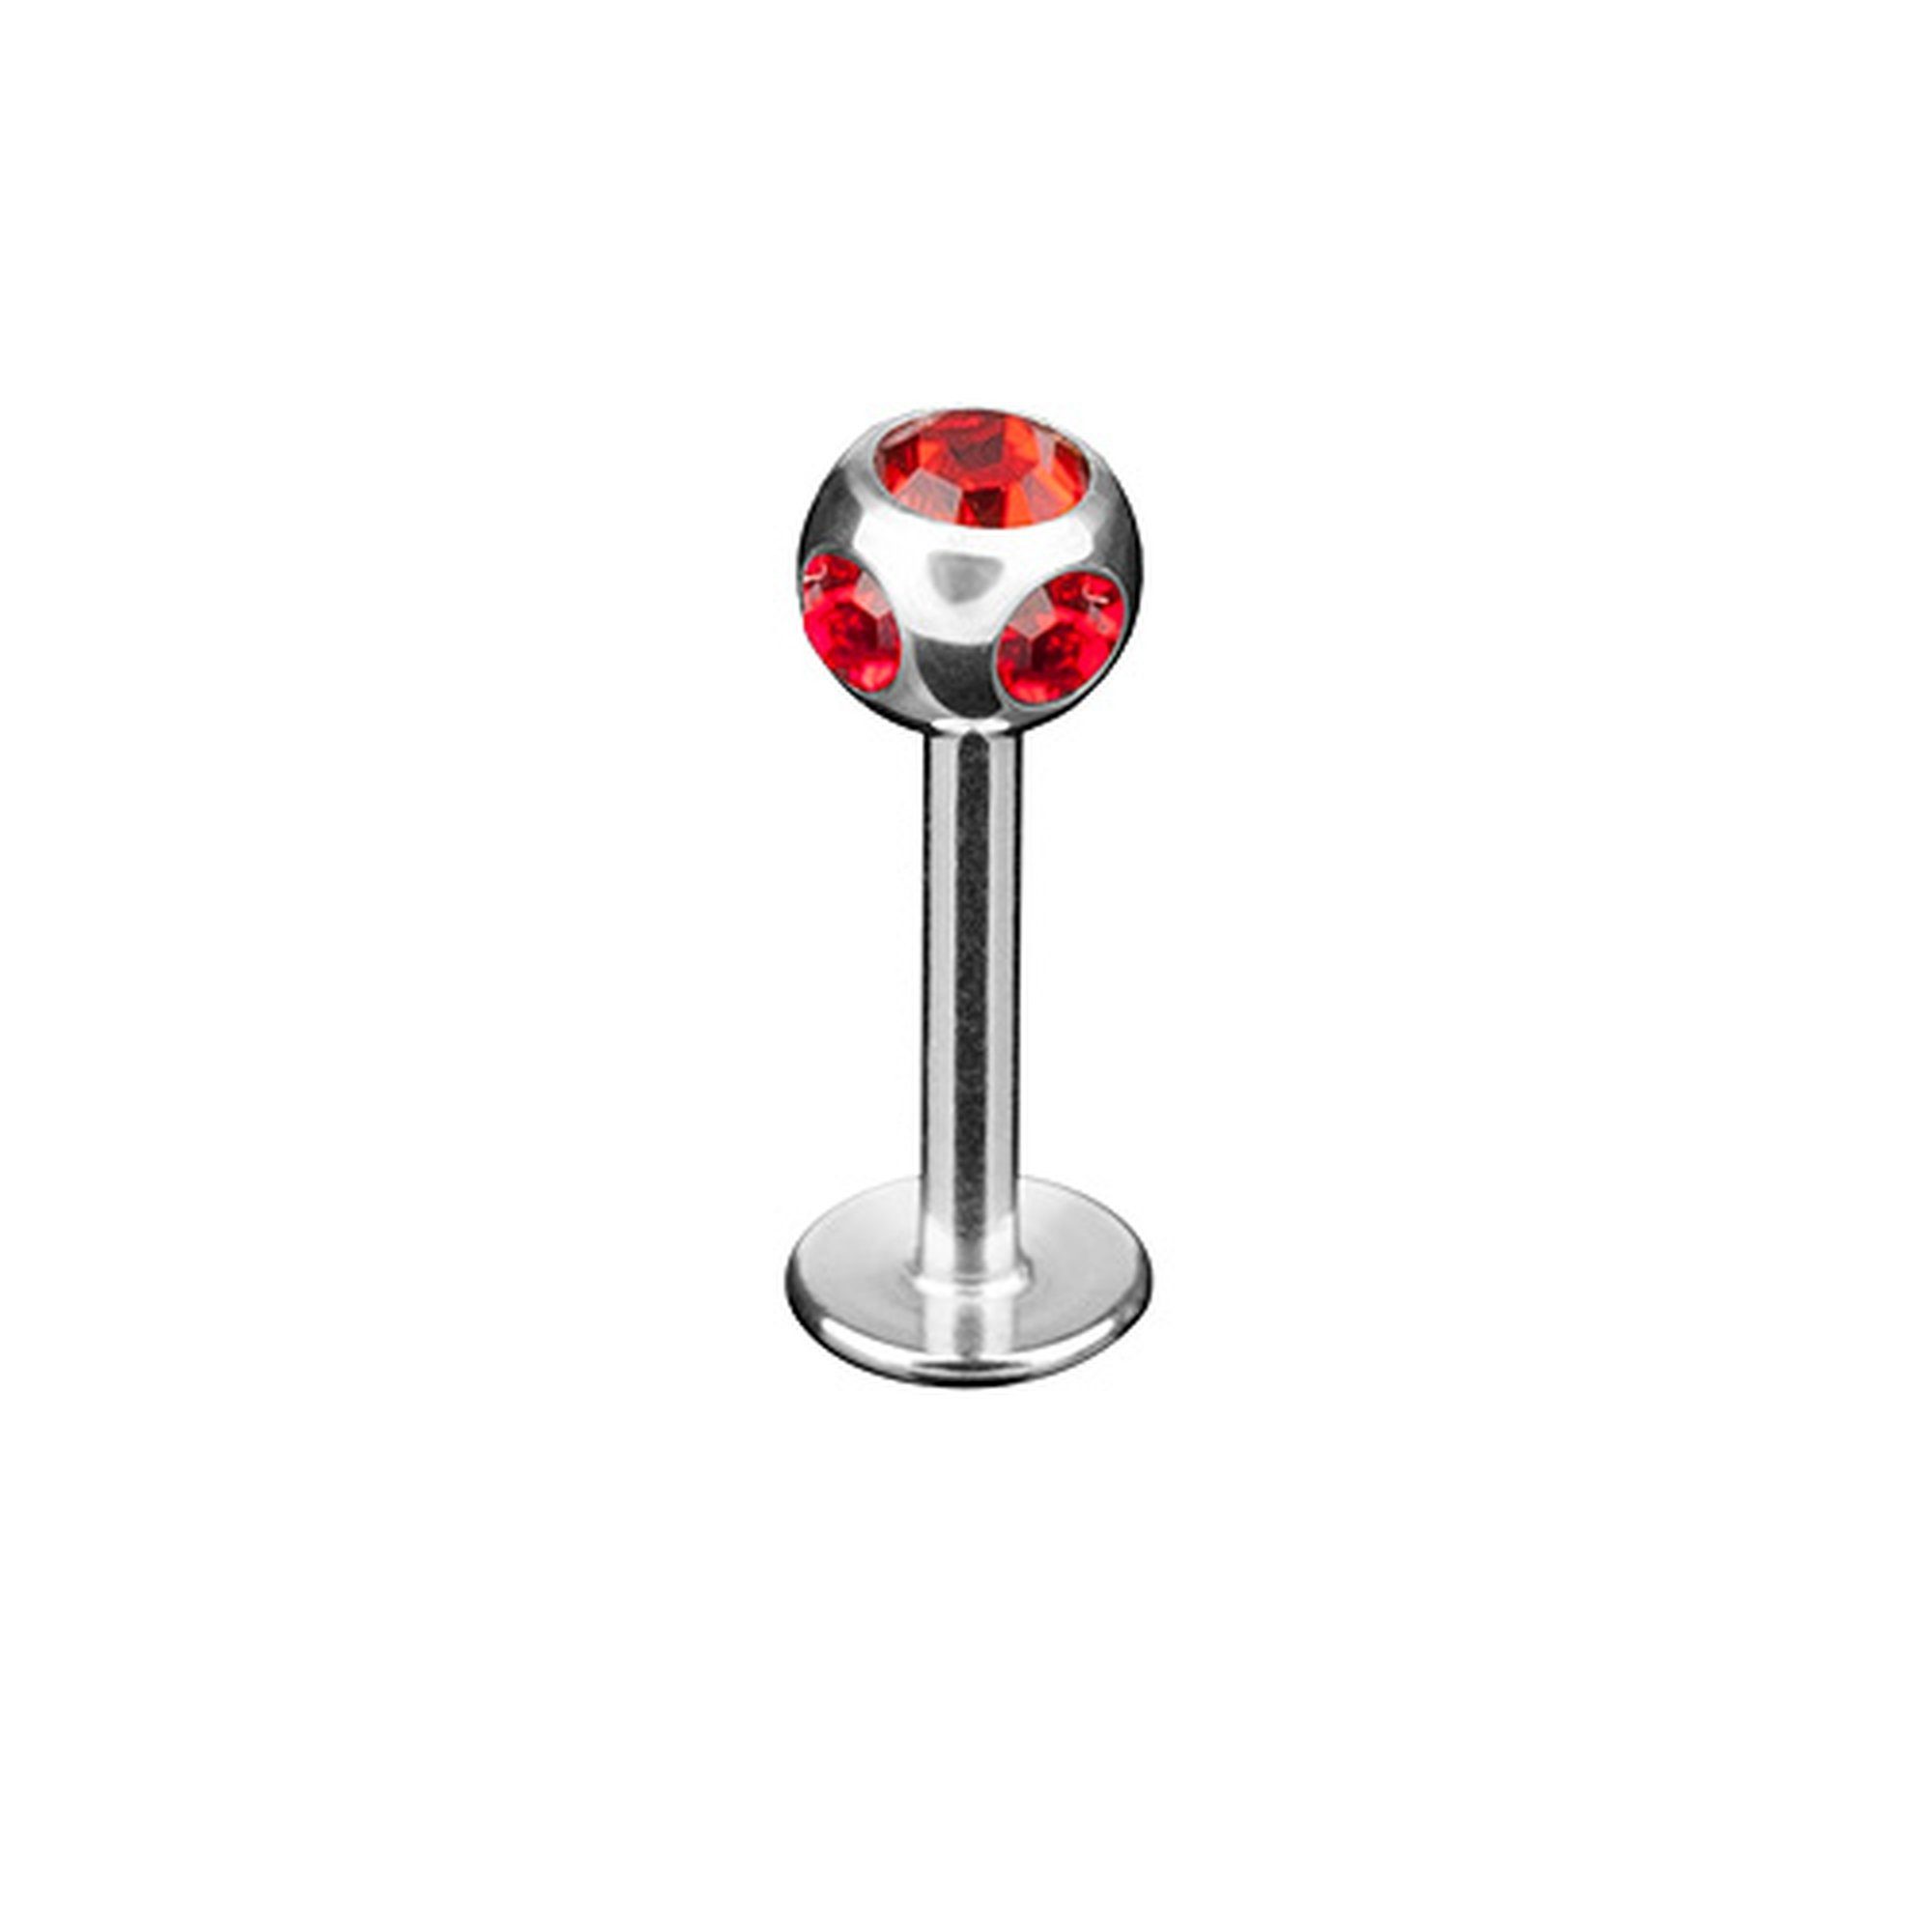 Taffstyle Piercing-Set Piercing Labret Stecker Multi Kristall, Lippenpiercing Schmuck Labret Stecker Lippenstecker mit Multi Kristall Rot